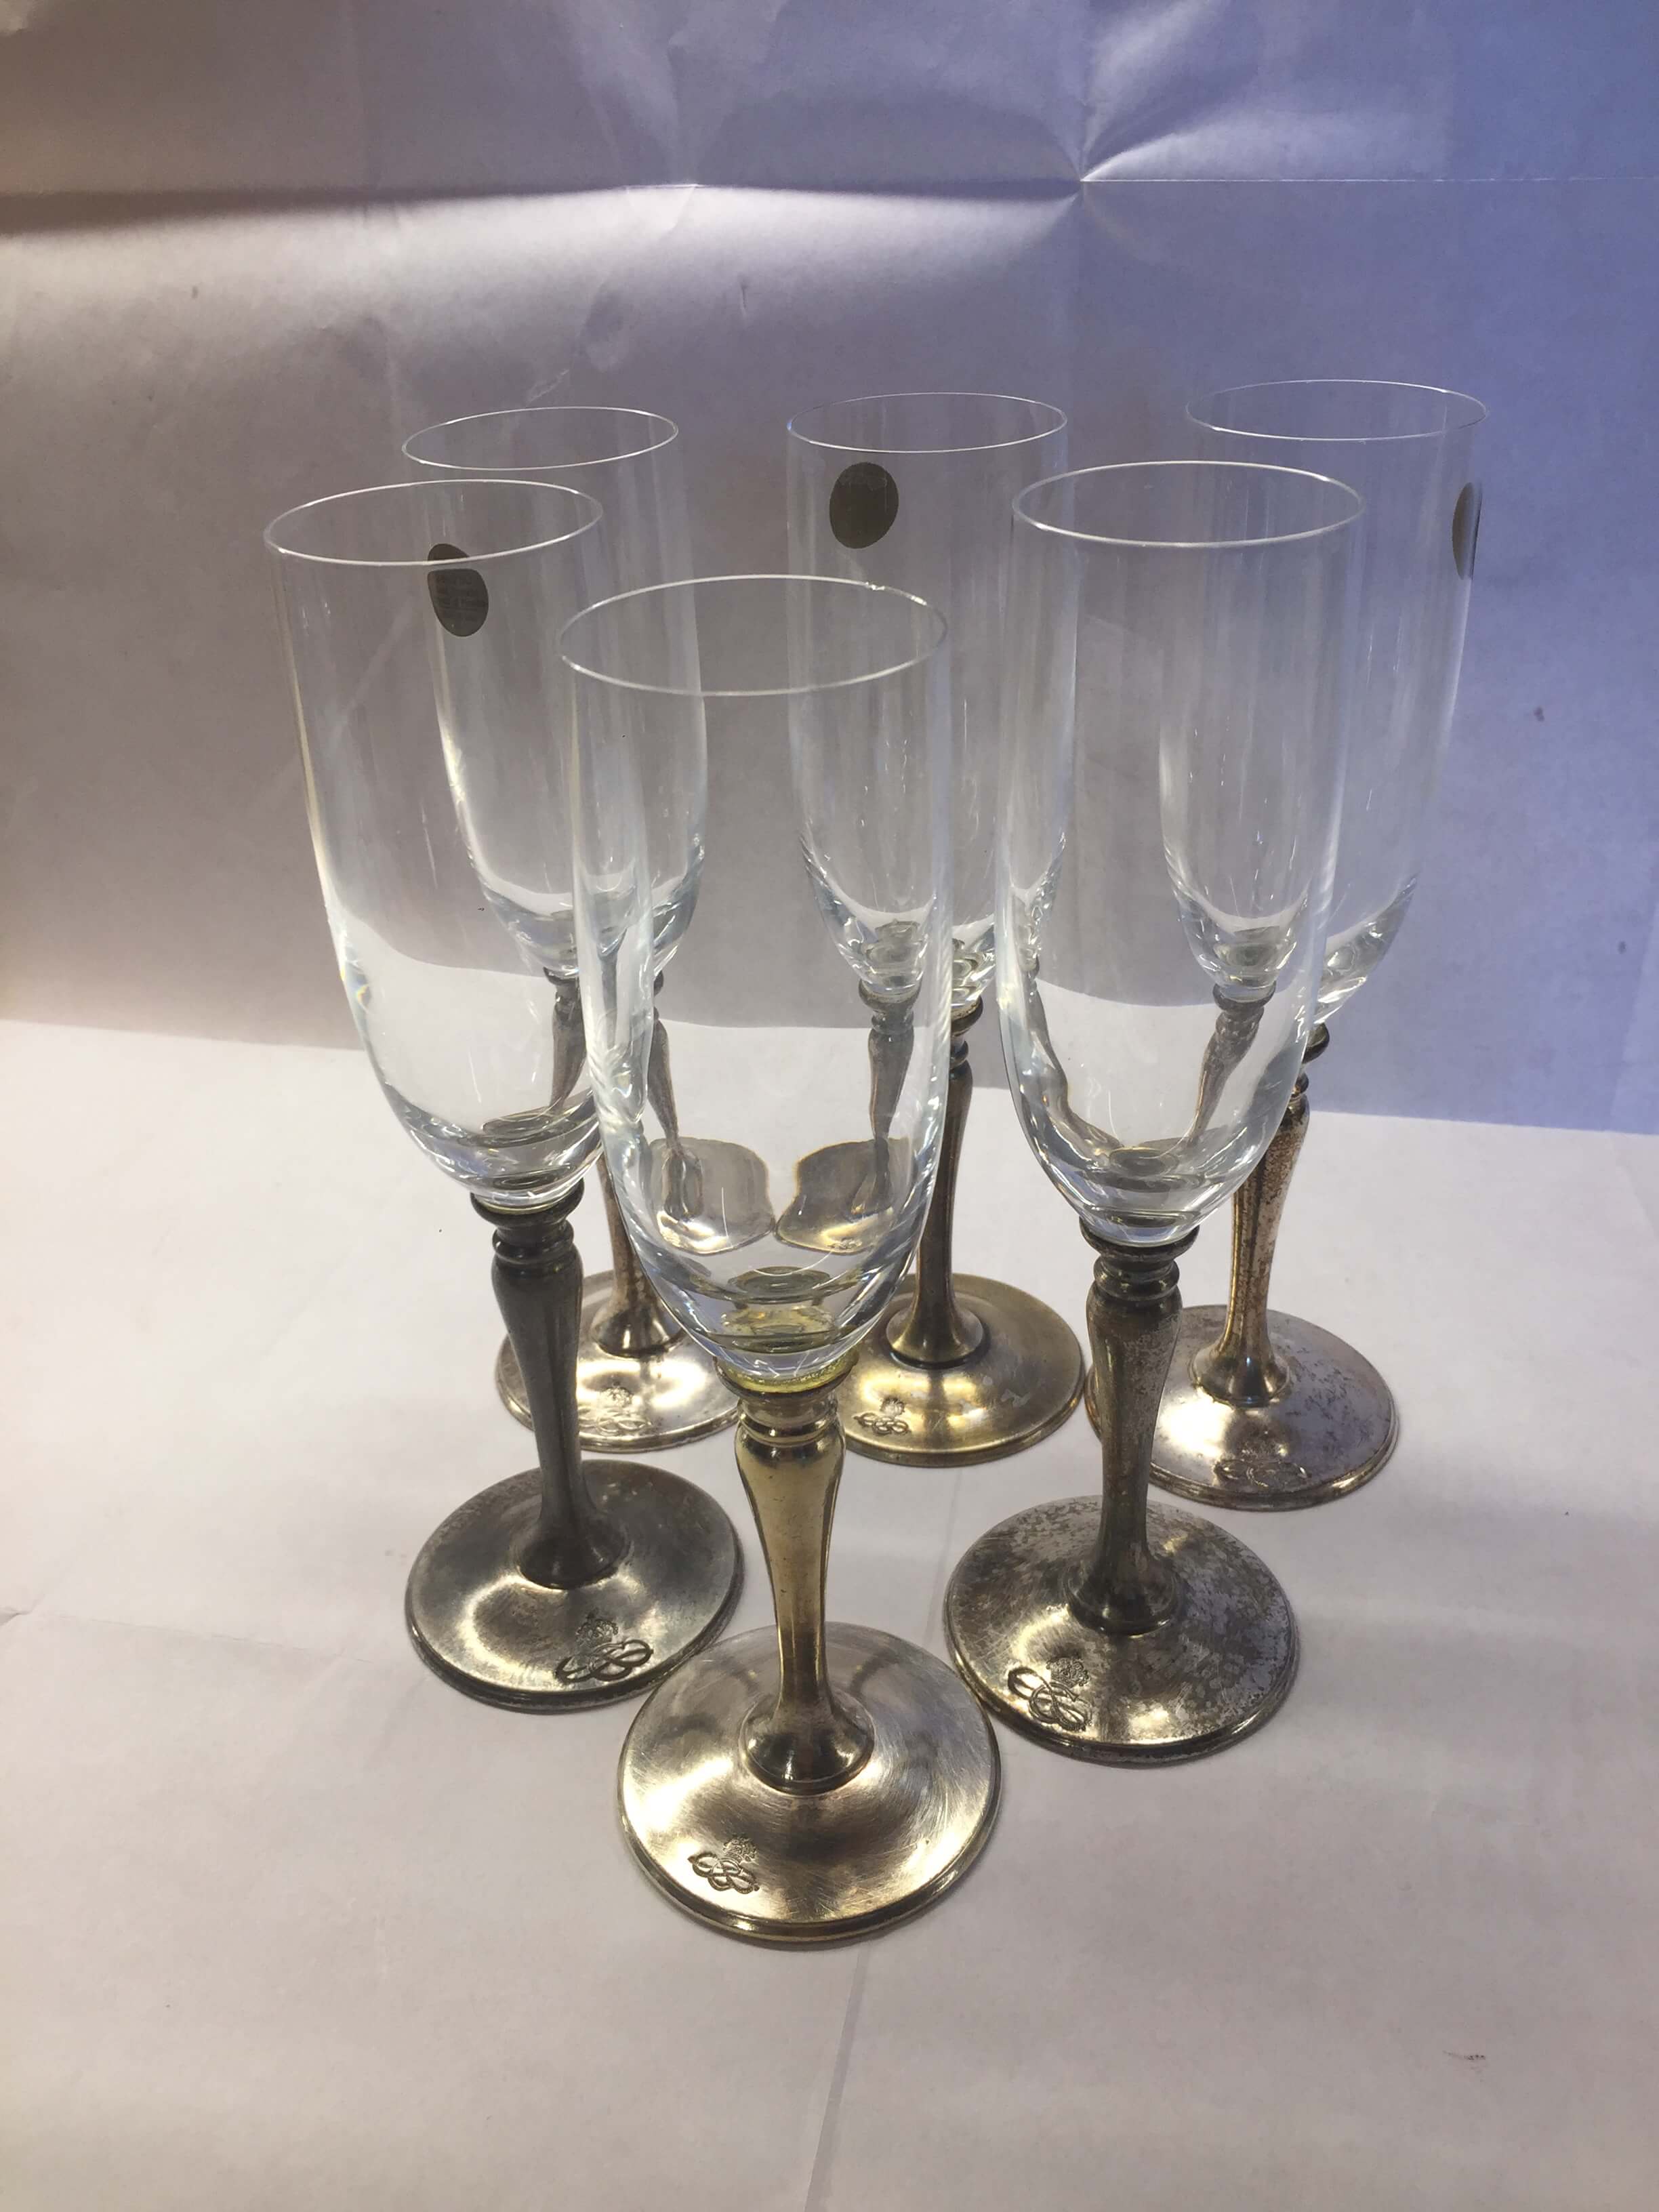 Epns England Vintage Set Of 4 Silver Plated Wine Goblets 1960s 13 X 7 Cm